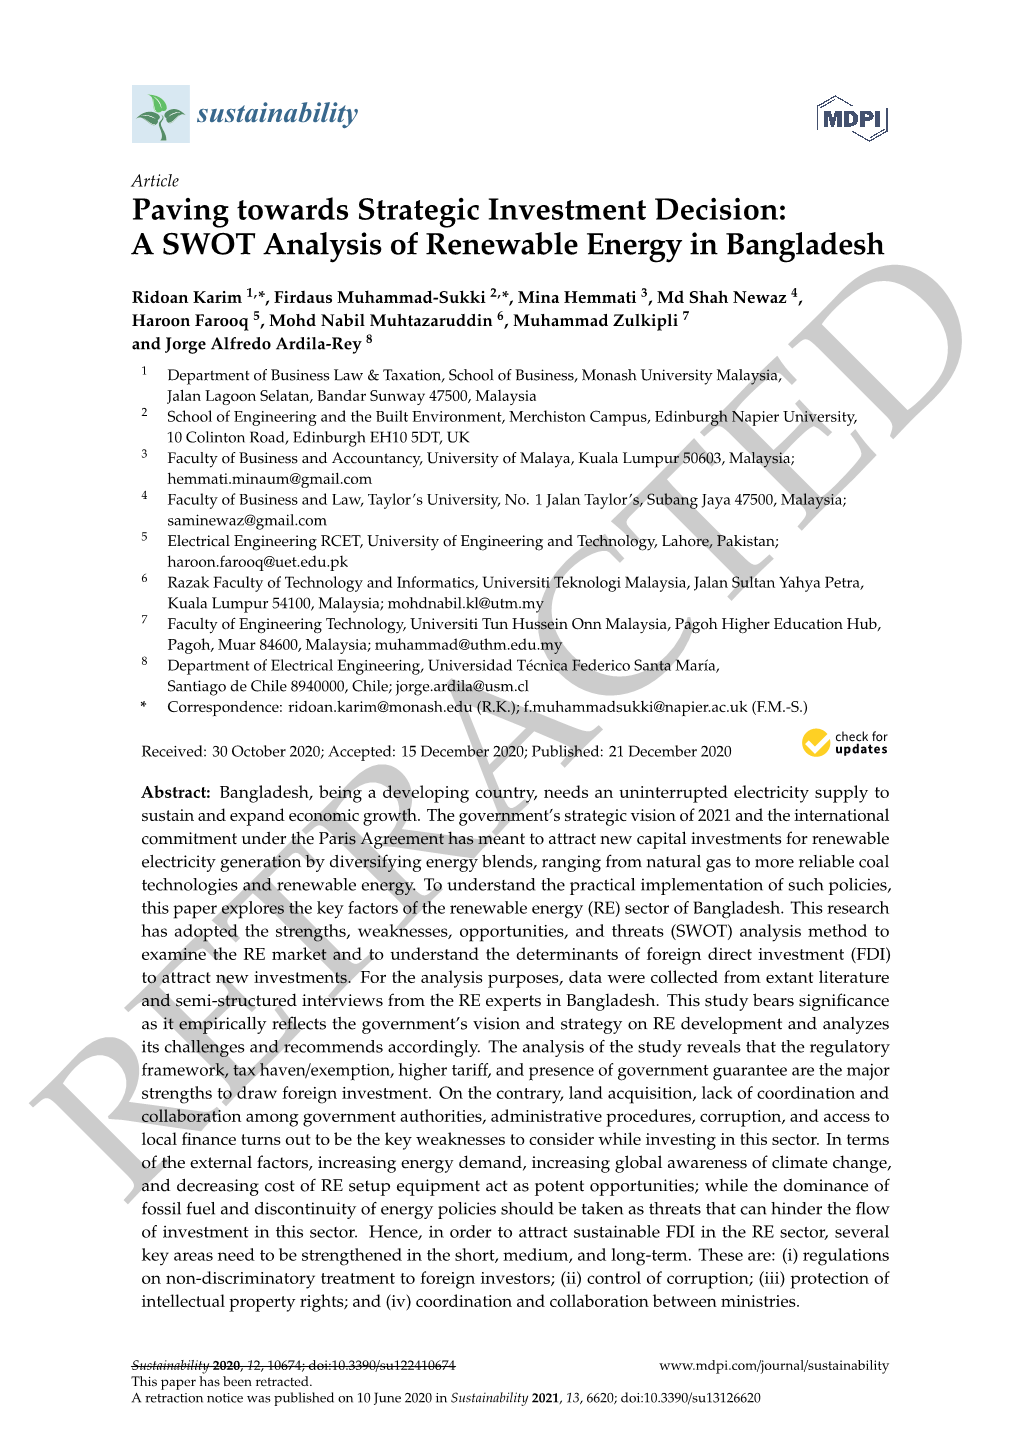 A SWOT Analysis of Renewable Energy in Bangladesh